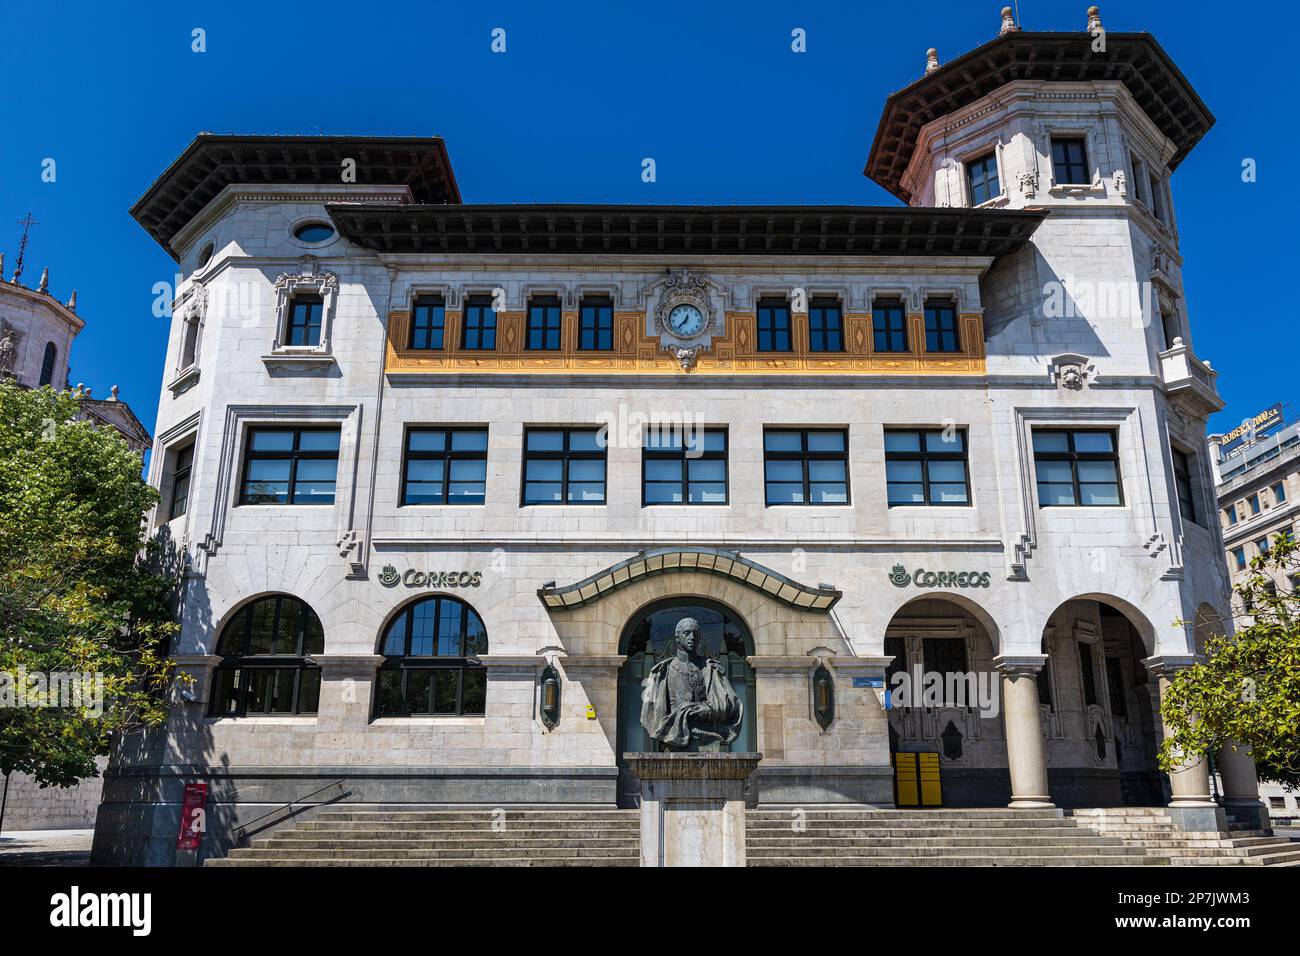 Postamt in Santander (Edificio de Correos), Gebäude im regionalistischen Bergstil mit zwei polygonalen Türmen. Santander, Kantabrien, Spanien. Stockfoto